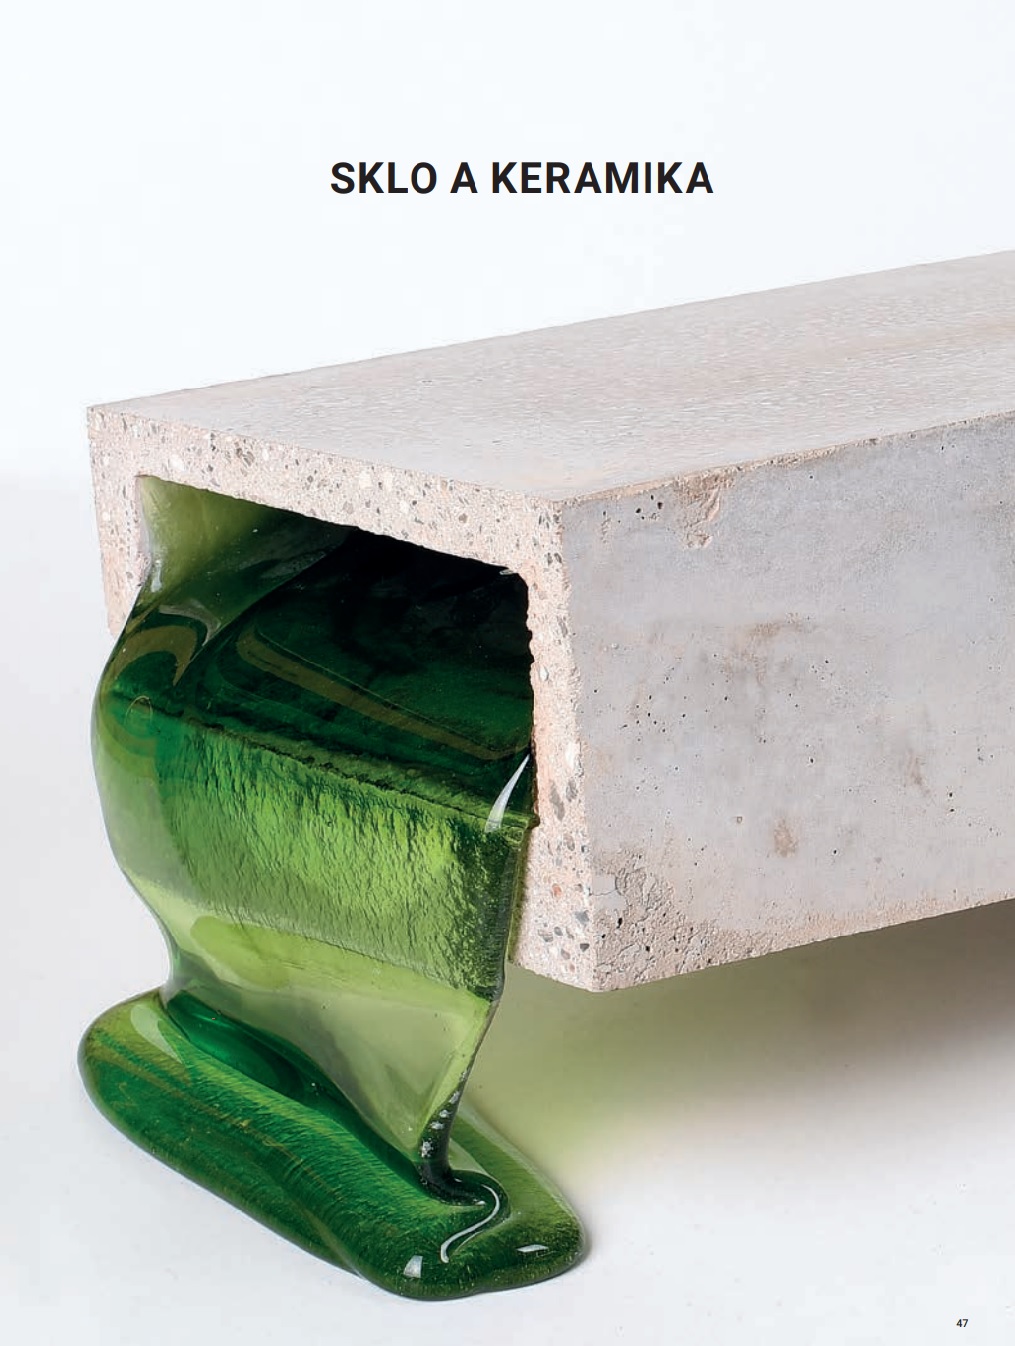 Prague Auctions - Sklo a keramika  - 10/2017